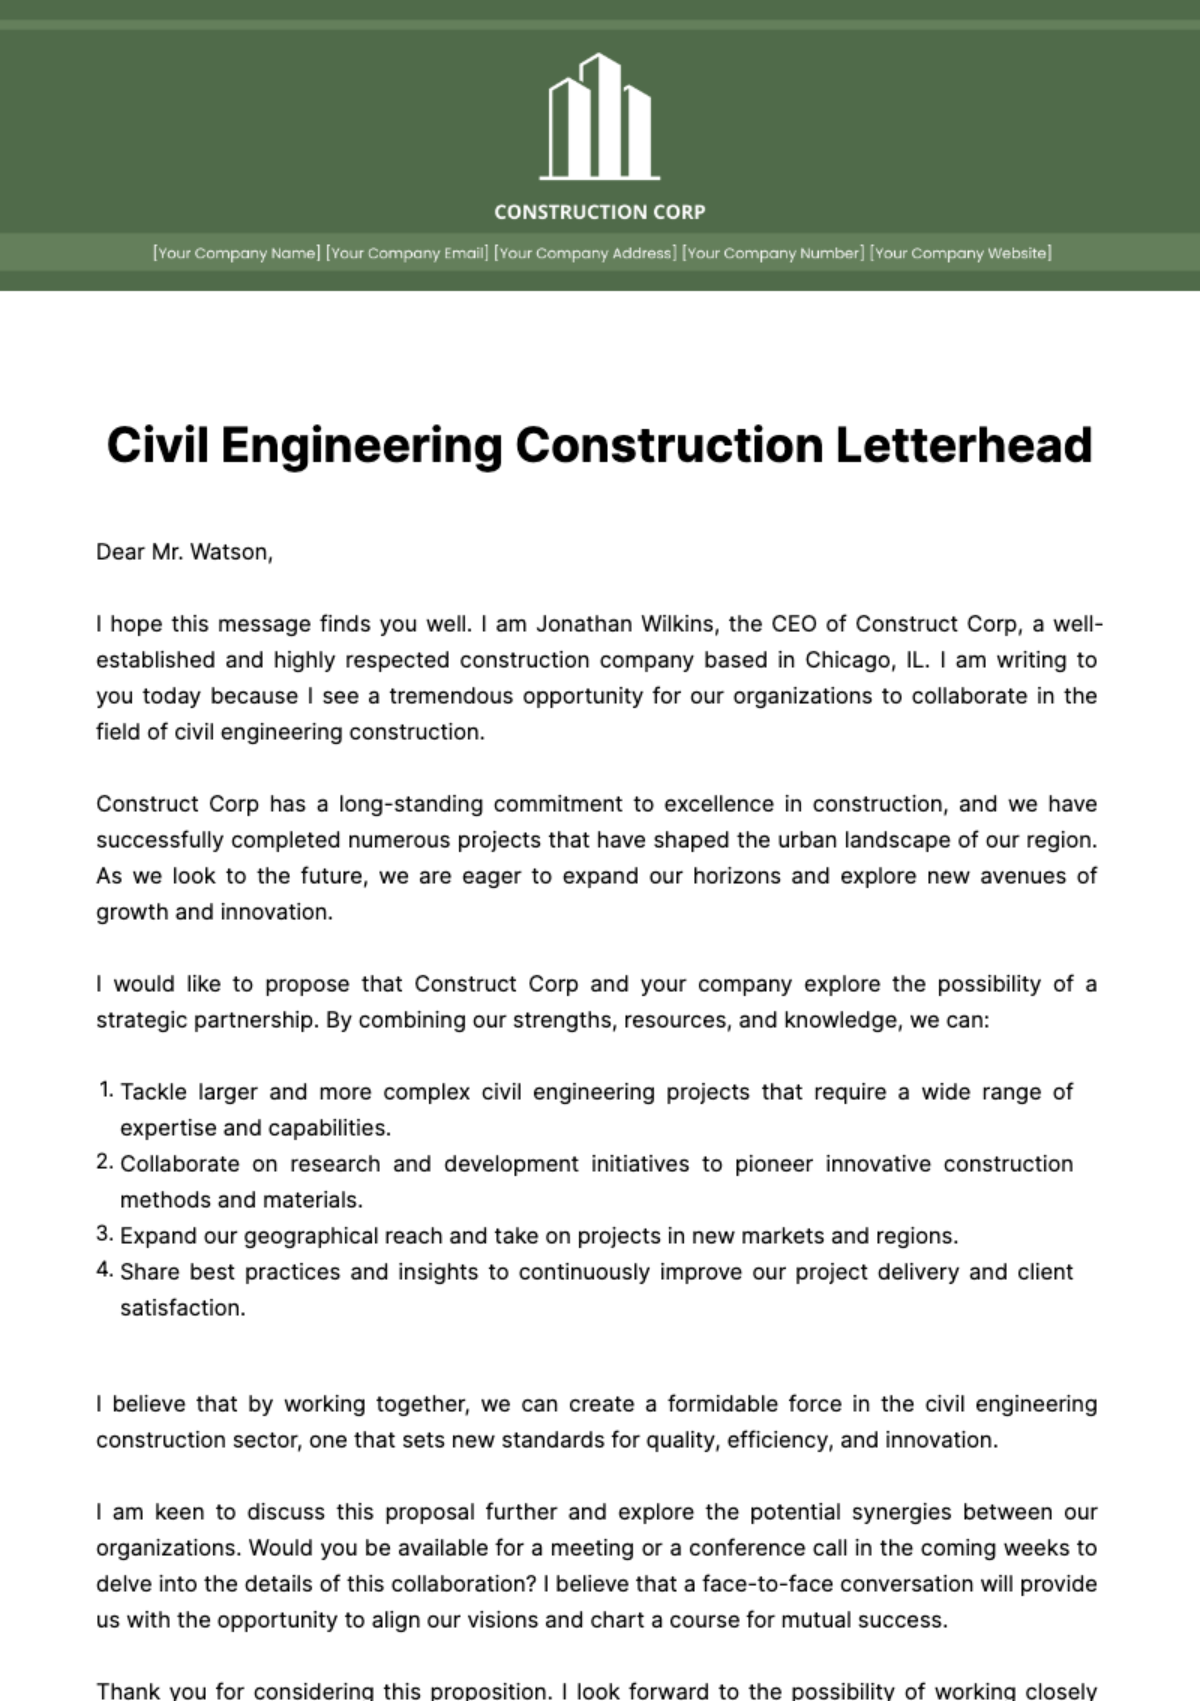 Free Civil Engineering Construction Letterhead Template